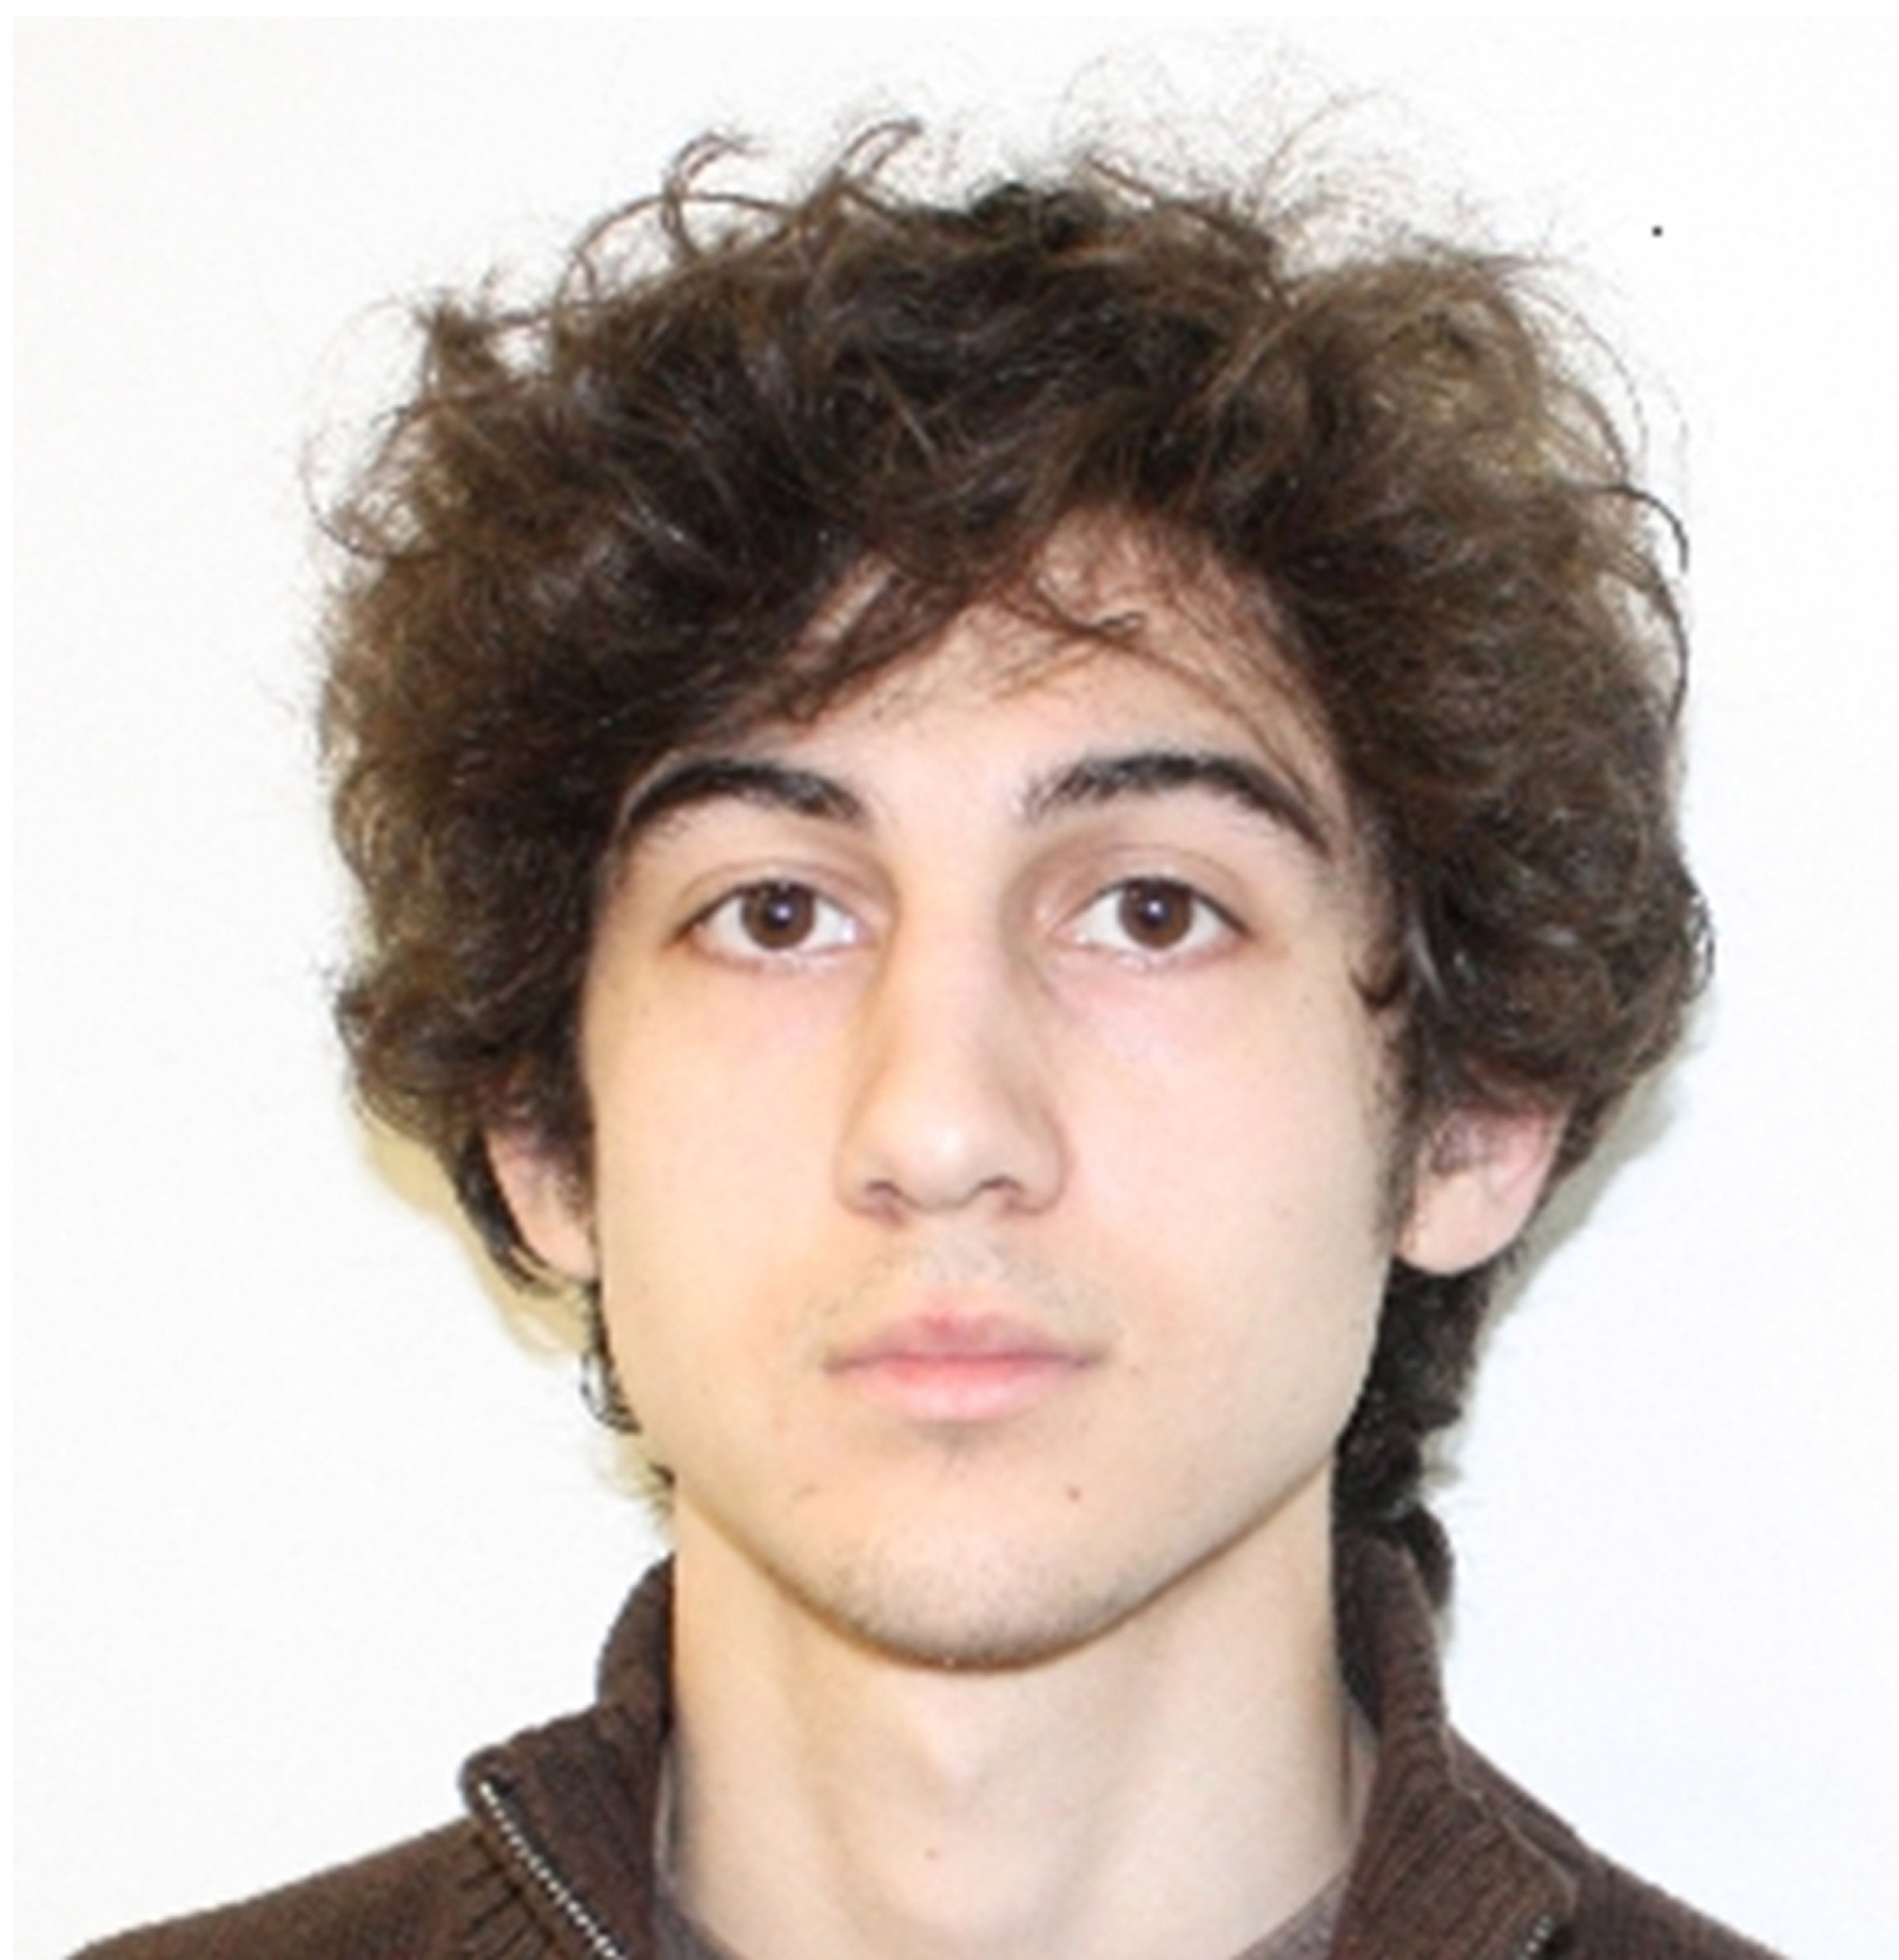 Dzhokhar Tsarnaev accused Boston bomber